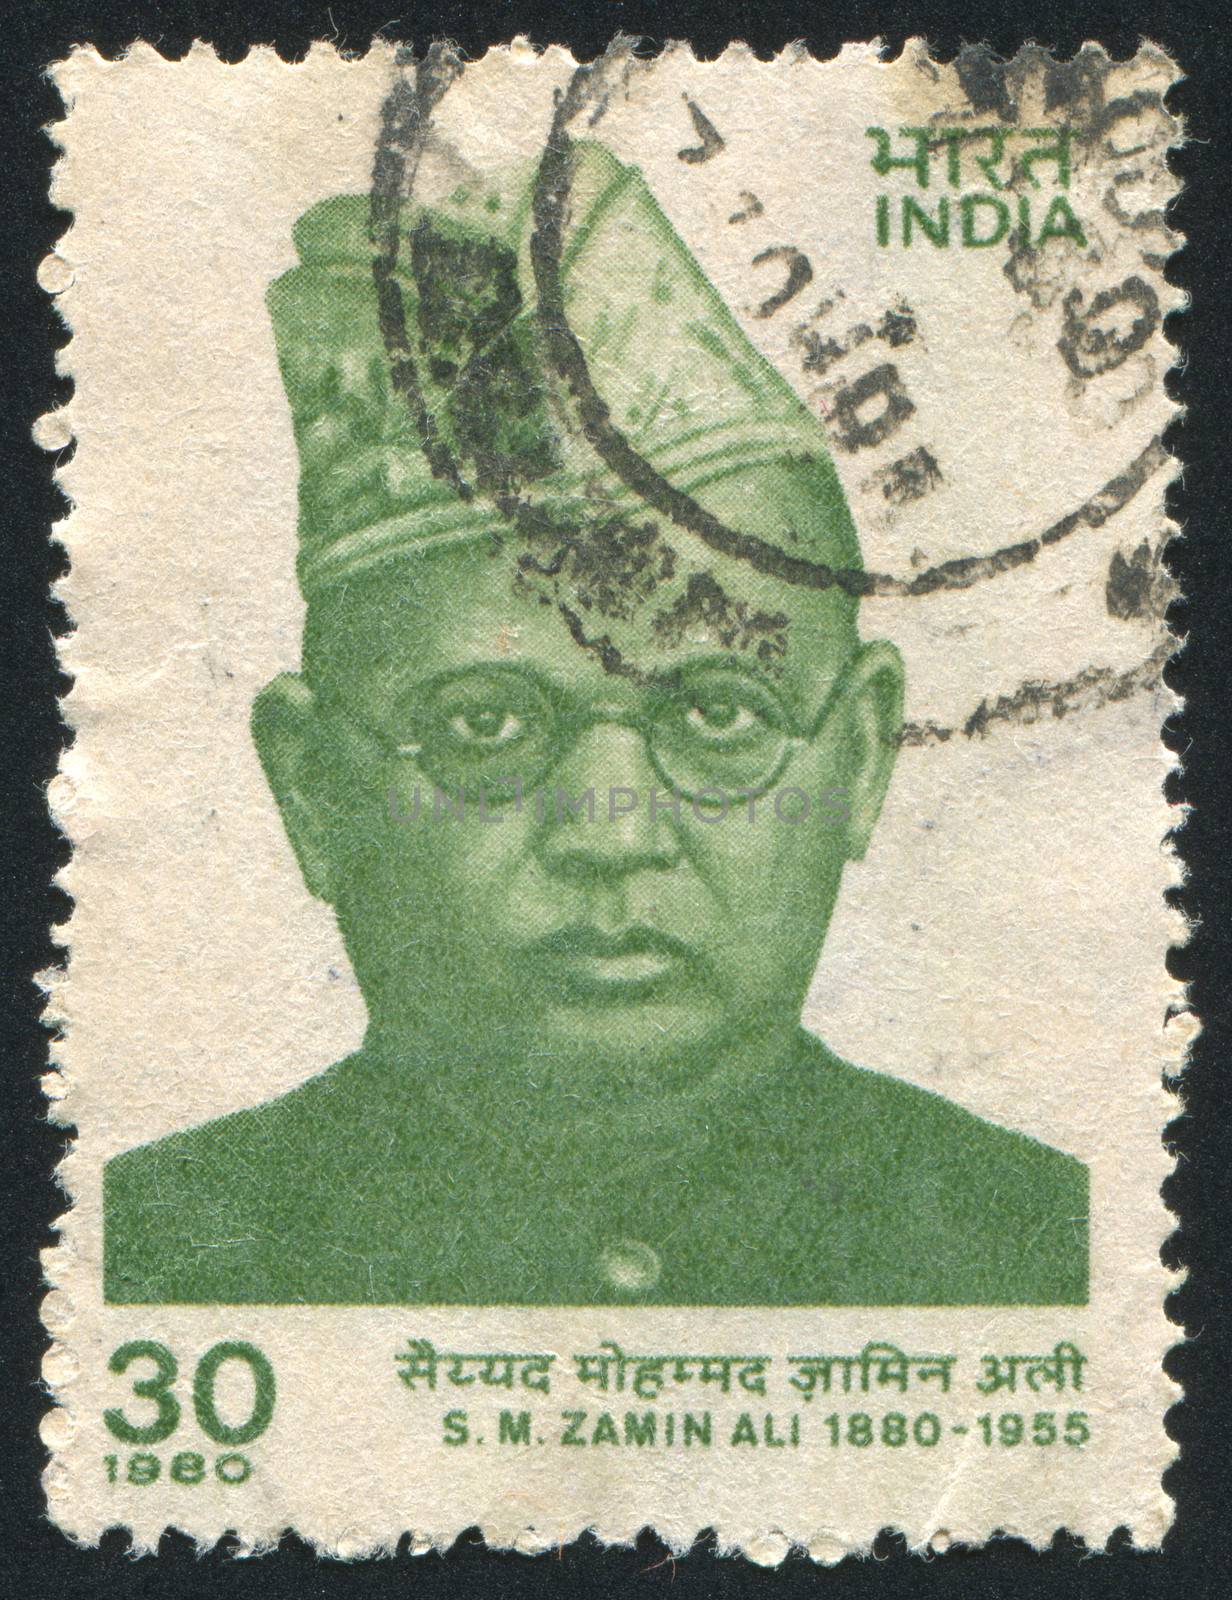 INDIA - CIRCA 1980: stamp printed by India, shows Syed Mohammad Zamin Ali, circa 1980